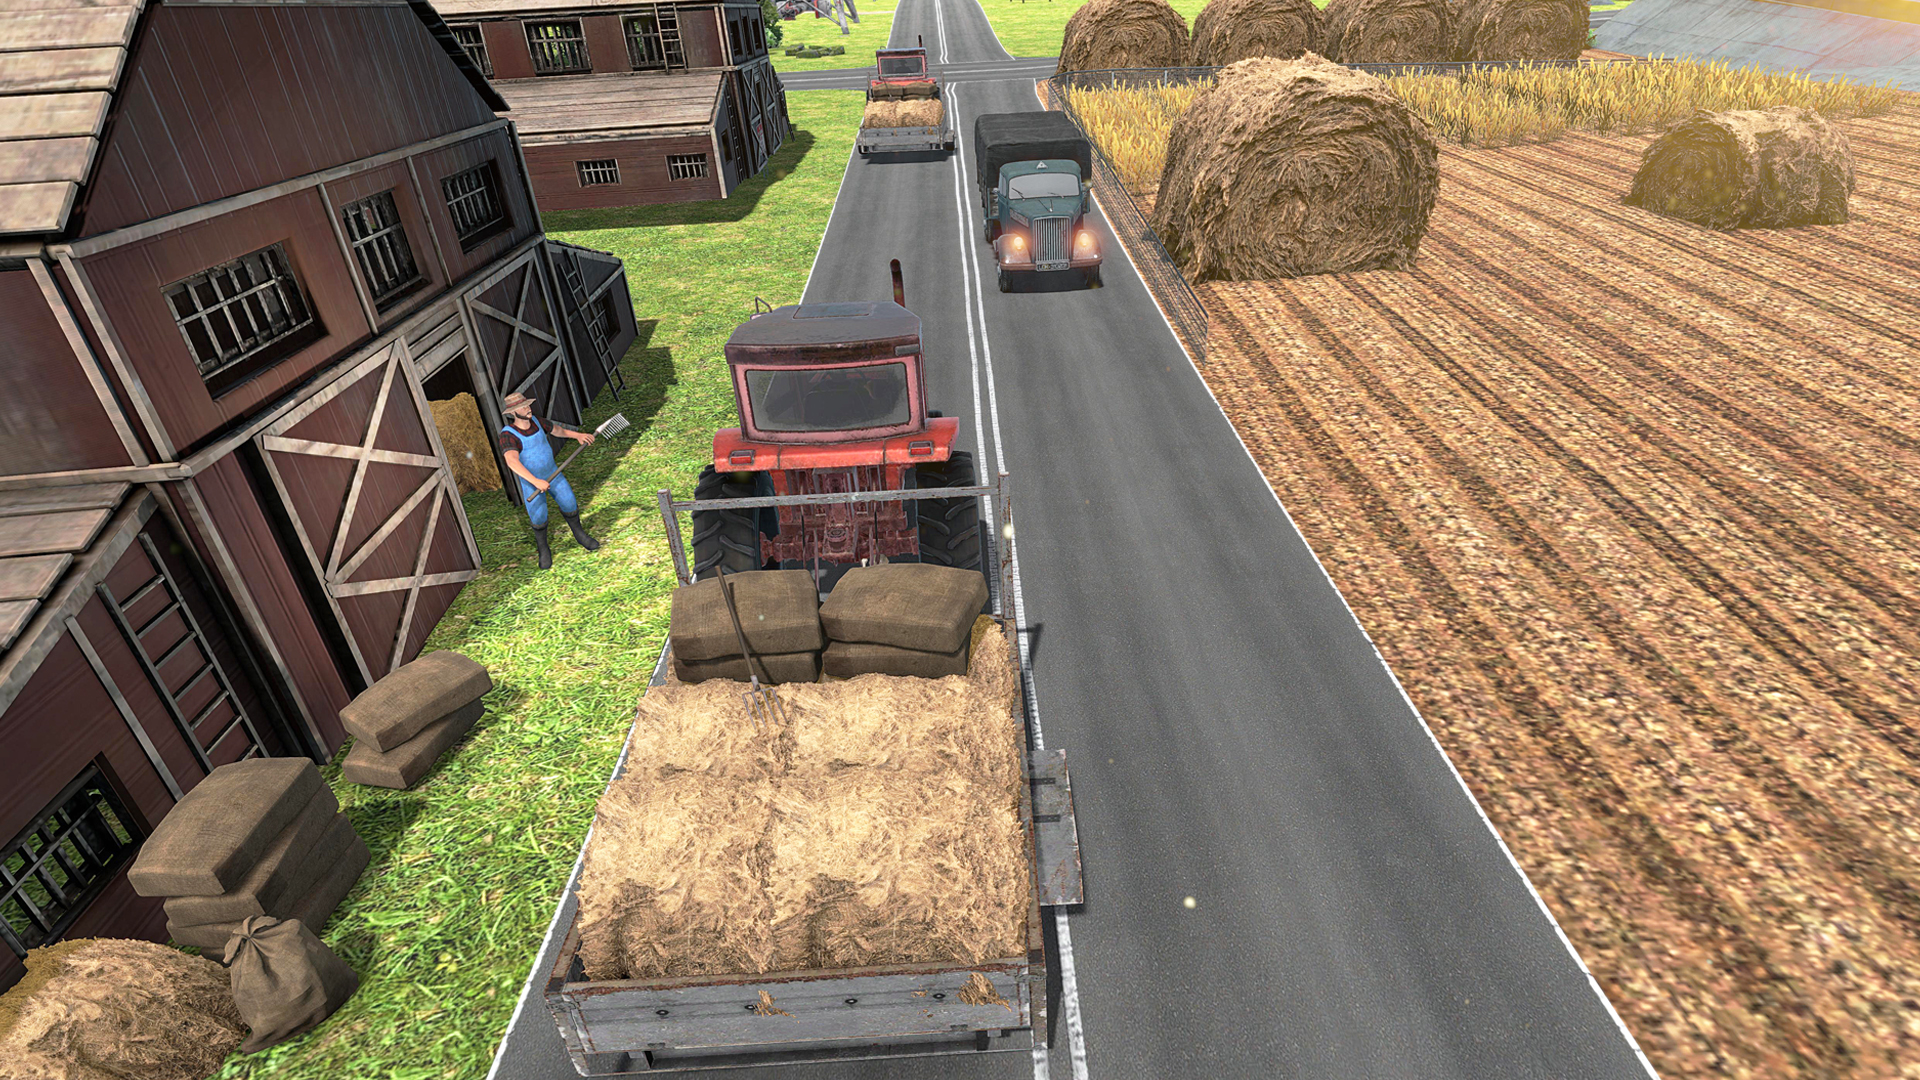 US Grand Harvest Farming Game